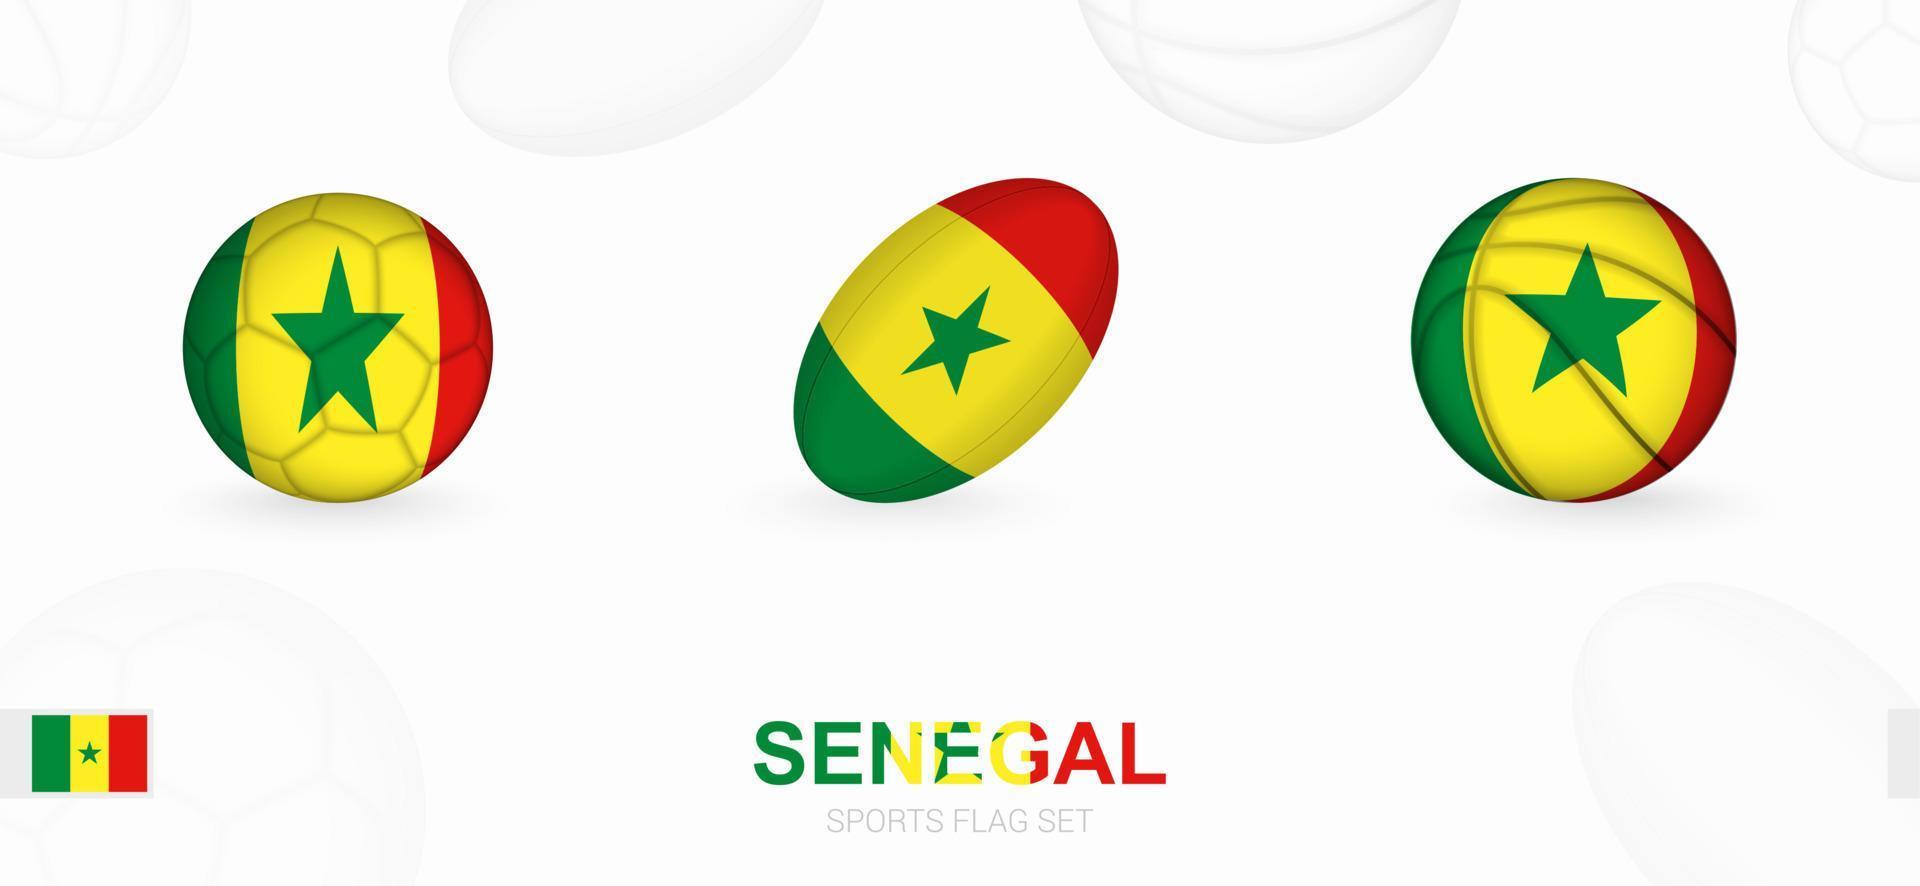 sport- pictogrammen voor Amerikaans voetbal, rugby en basketbal met de vlag van Senegal. vector